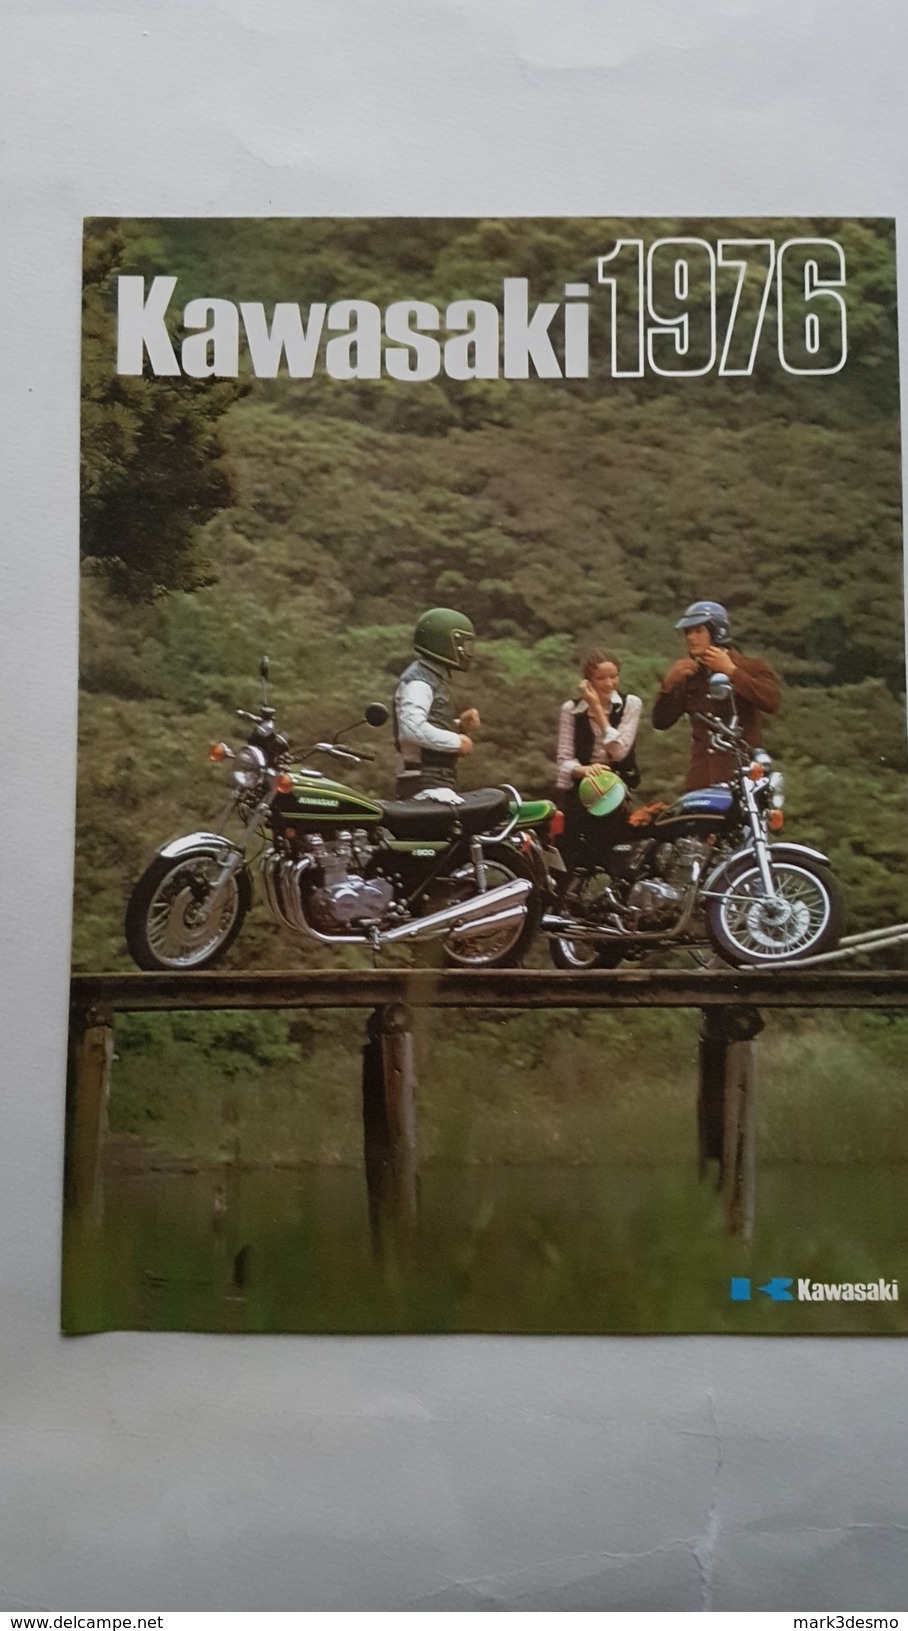 Kawasaki Catalogo Produzione Moto 1976 Depliant Originale  - Genuine Moped Motorcycle Brochure - Prospekt - Motori